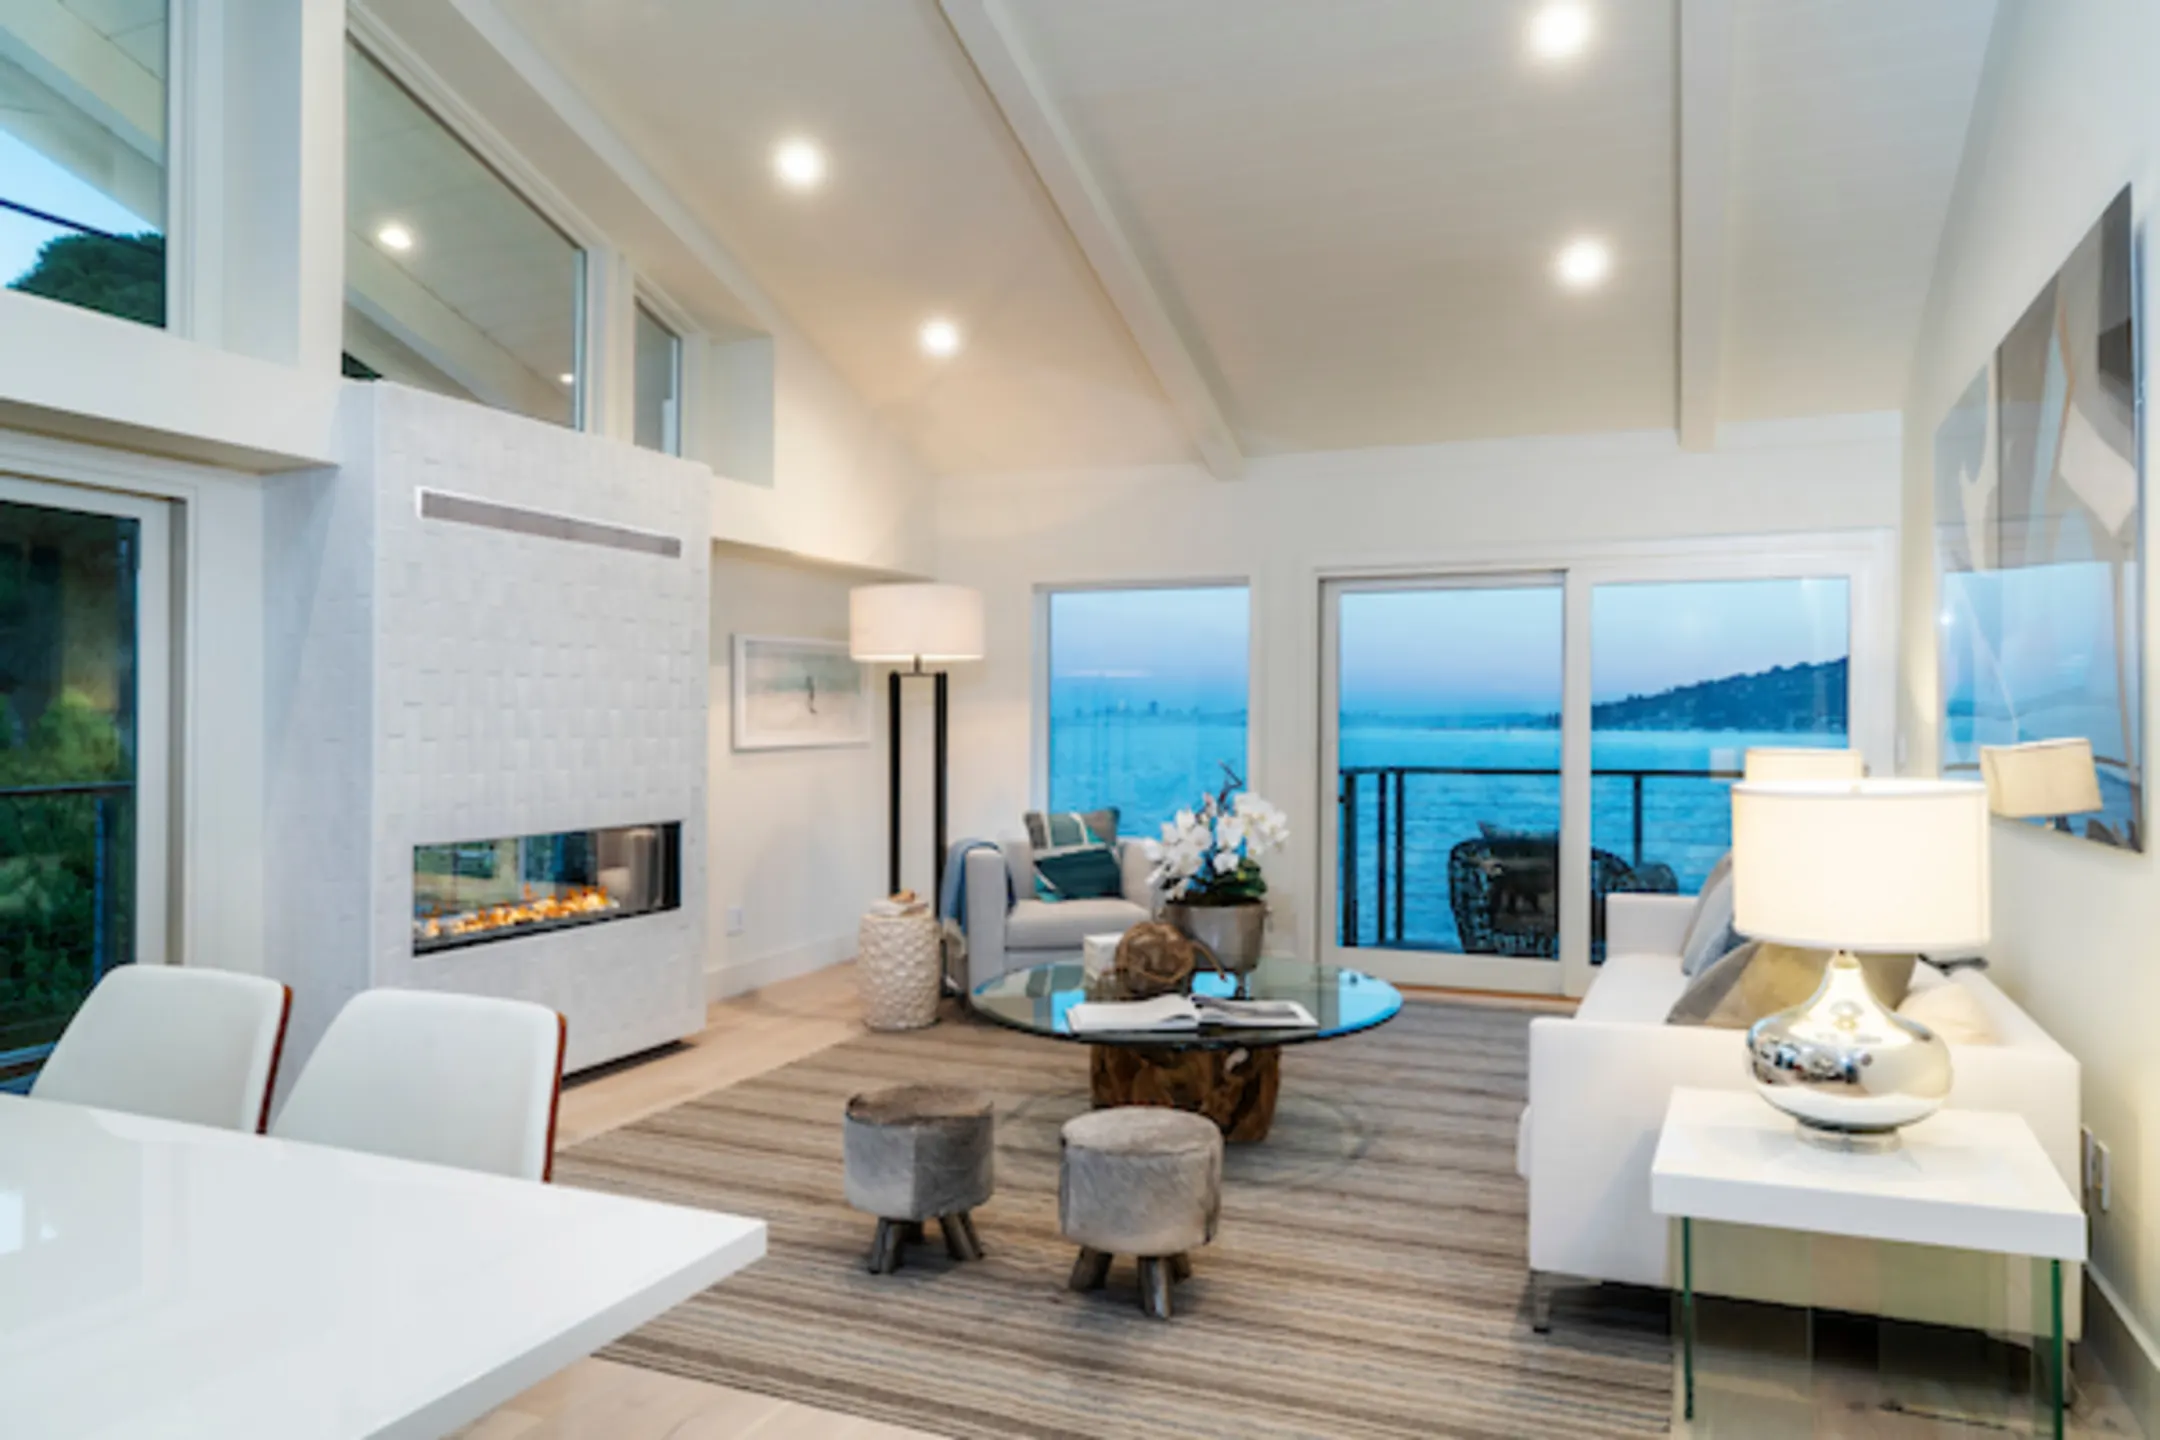 Living Room - The Cove At Tiburon - Belvedere Tiburon, CA